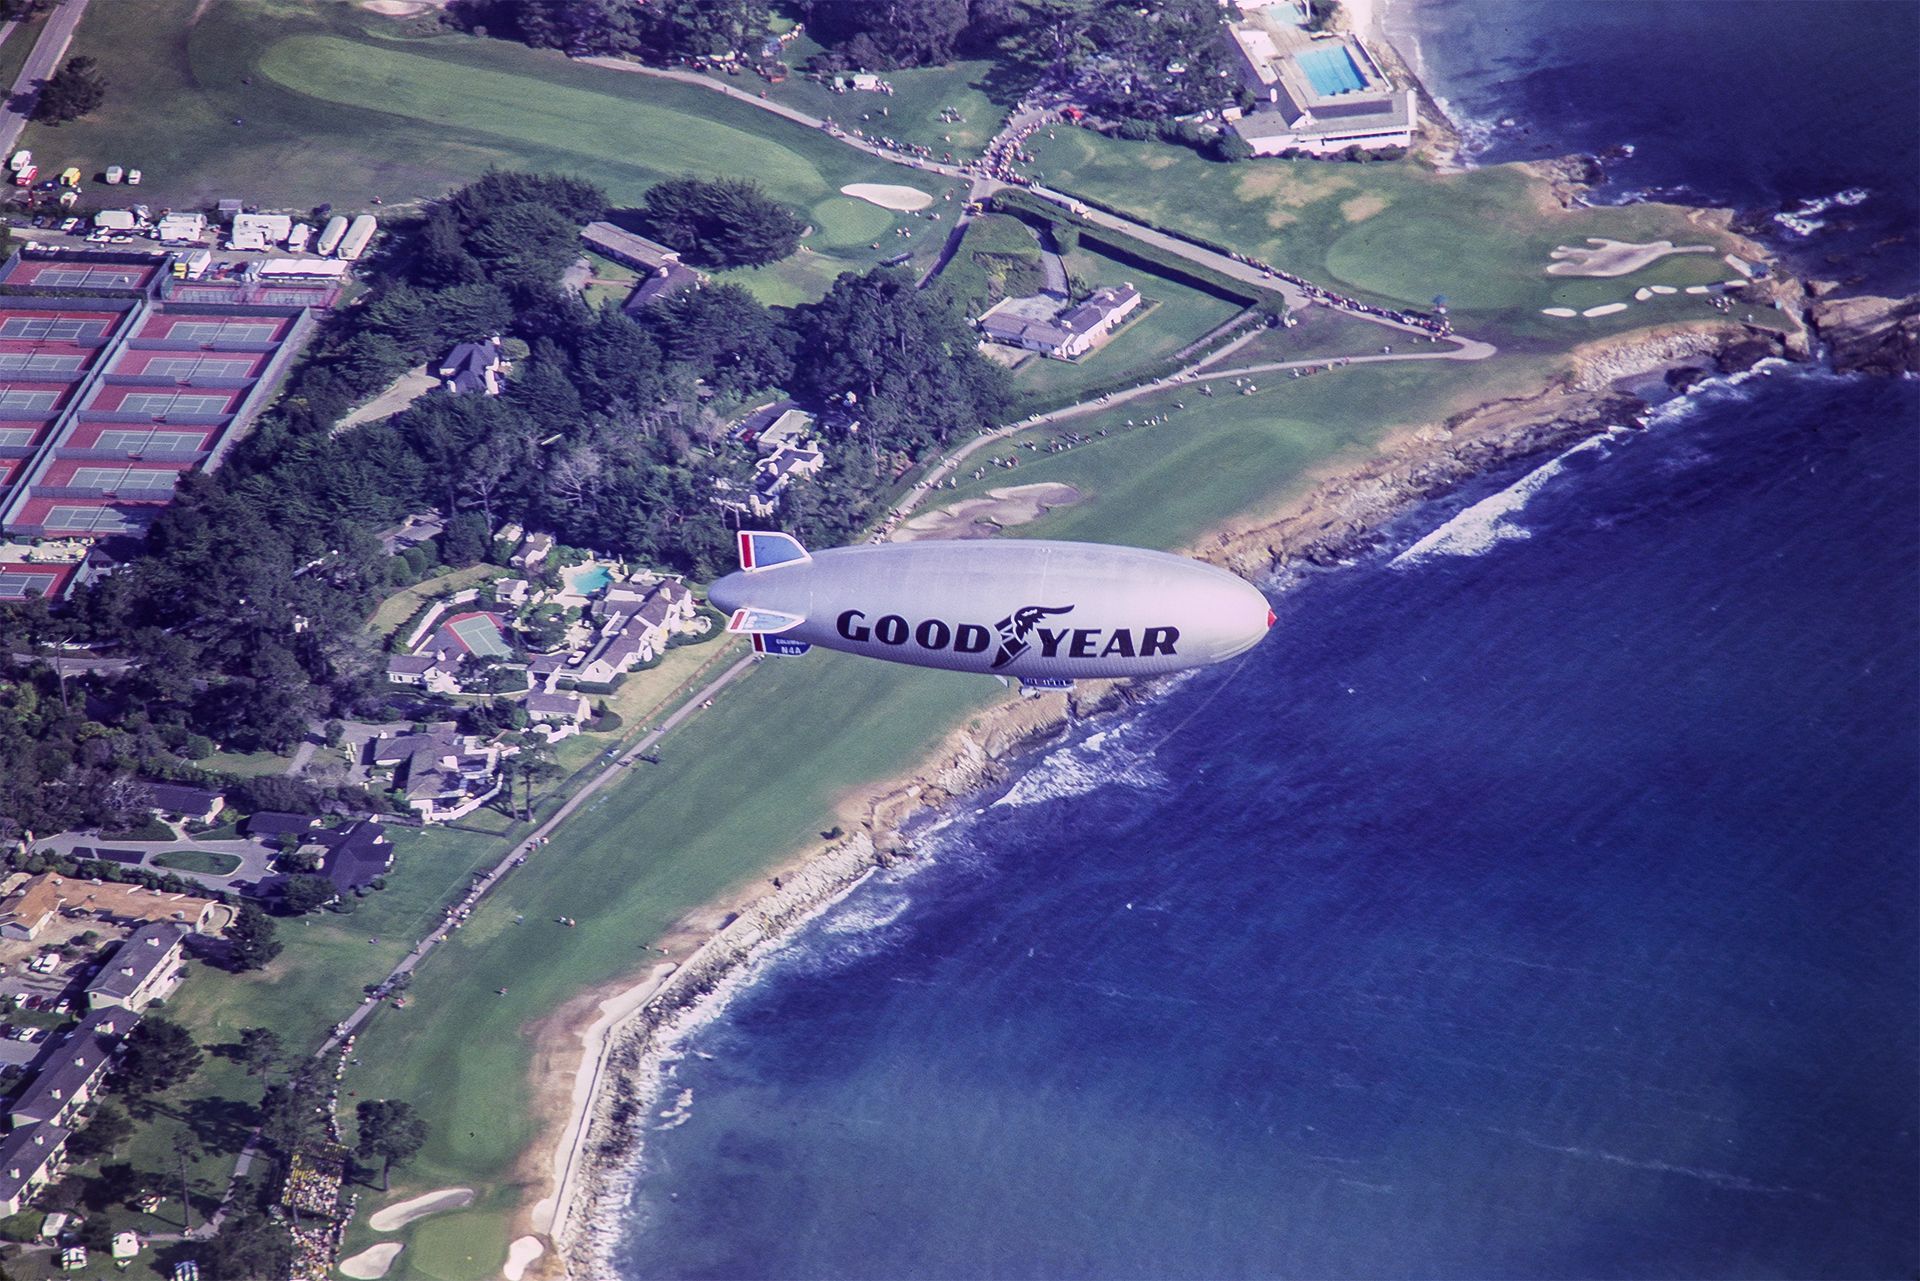 Goodyear blimp 1983 flying over Pebble Beach